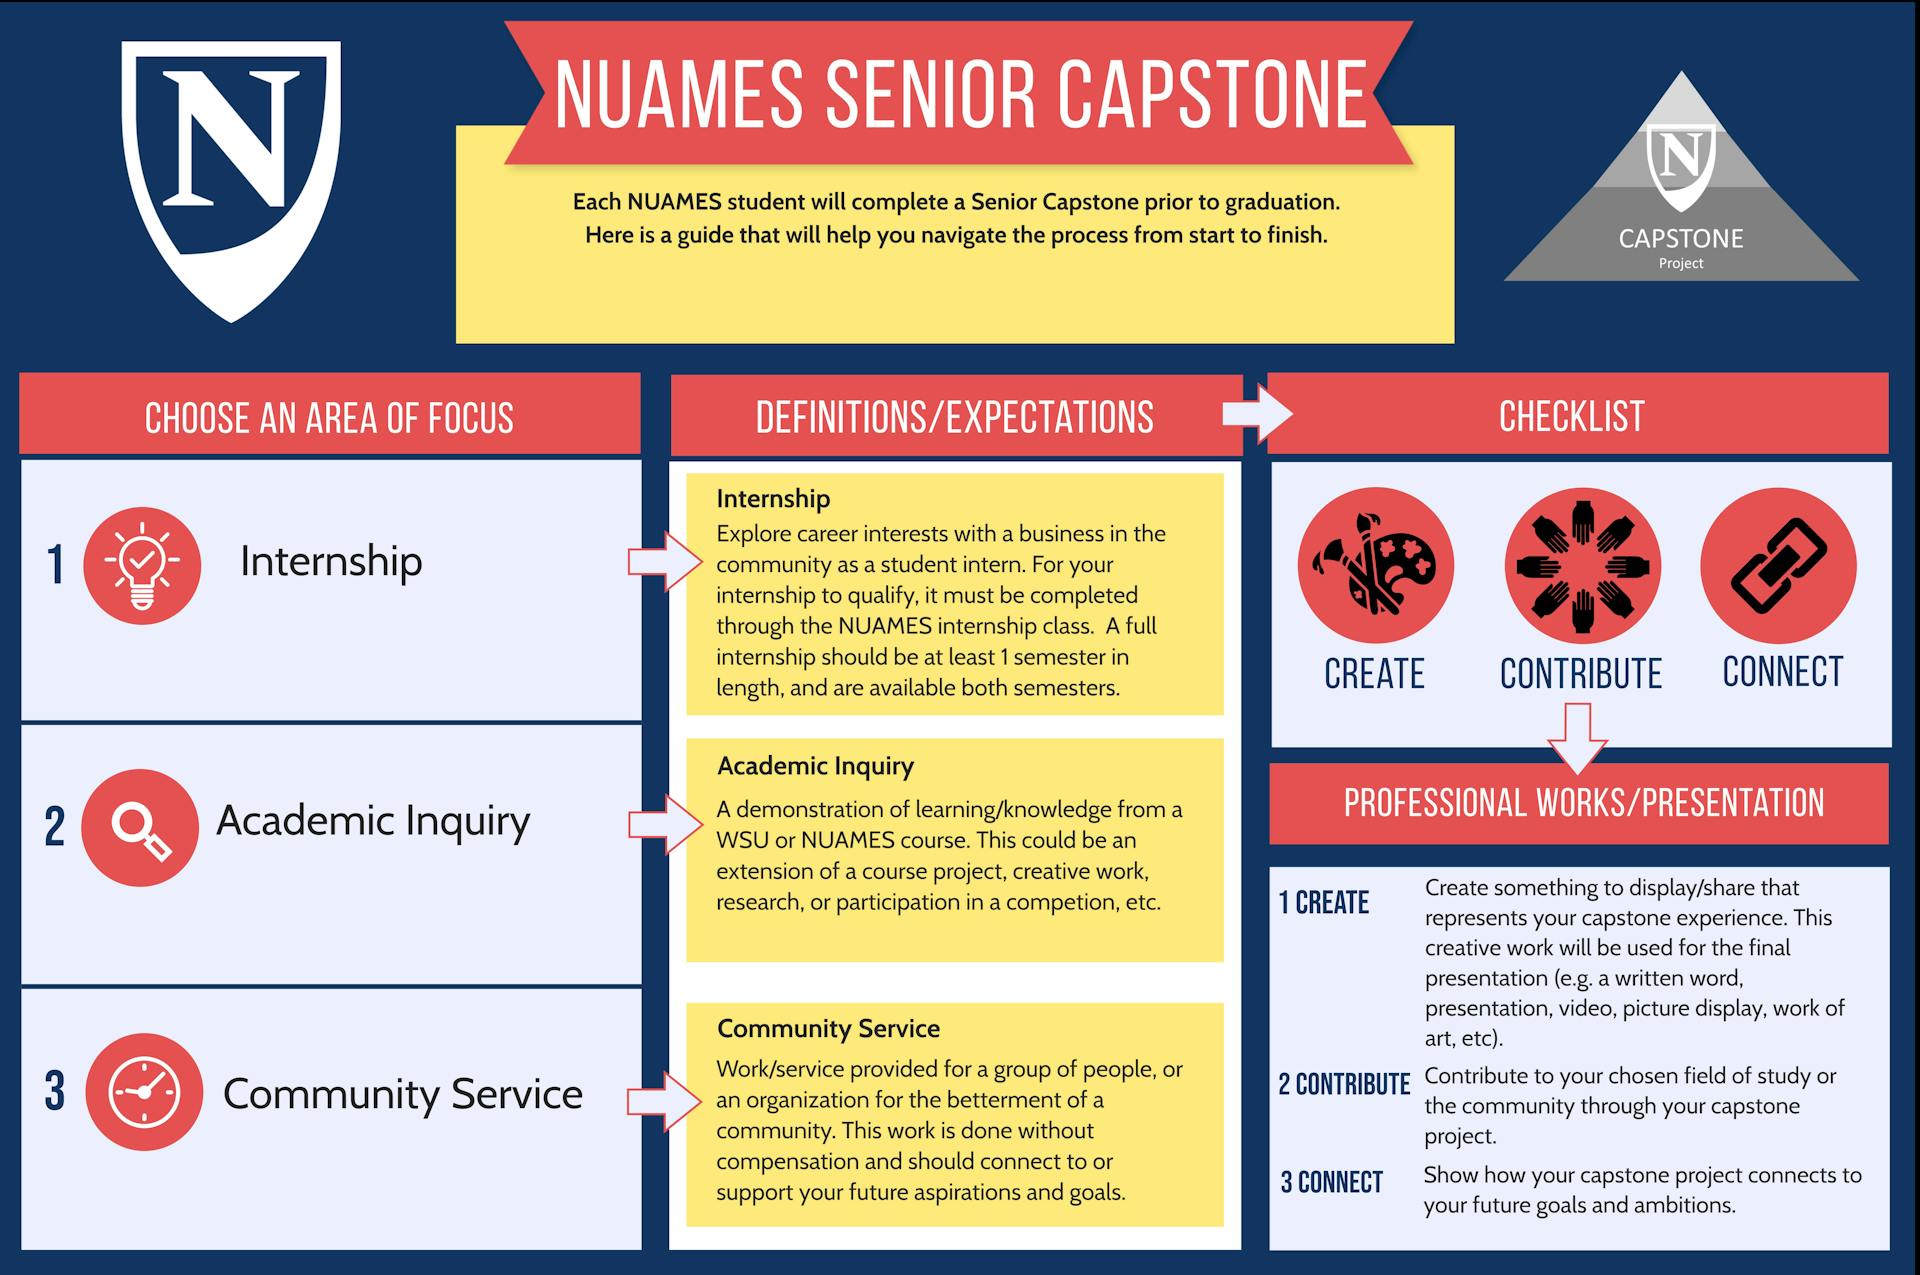  NUAMES Senior Capstone infographic 